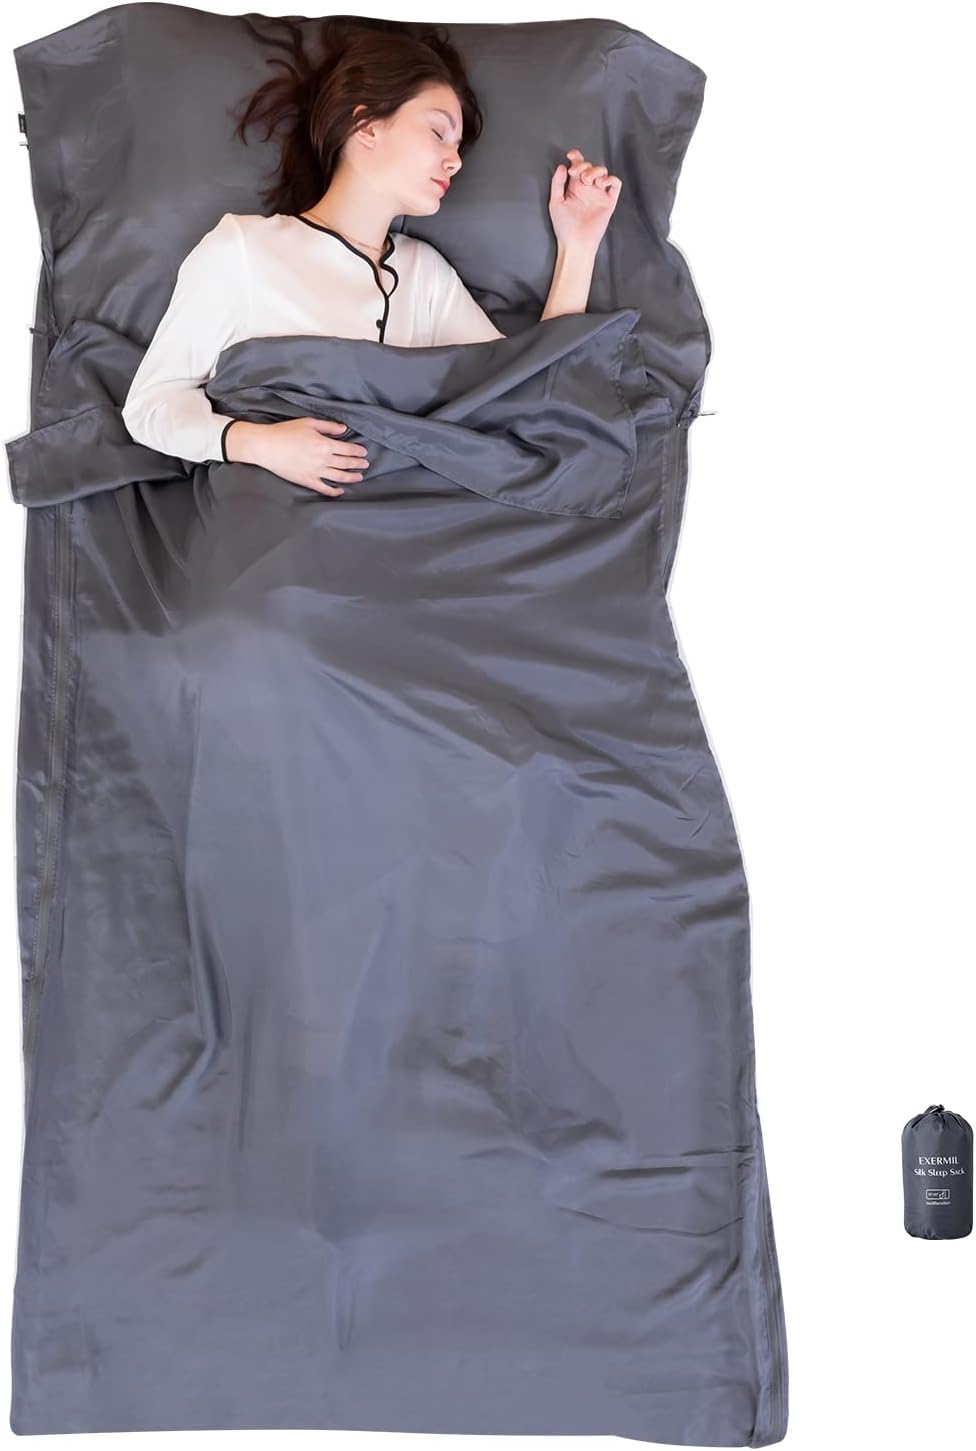 traveller sleeping bag liner